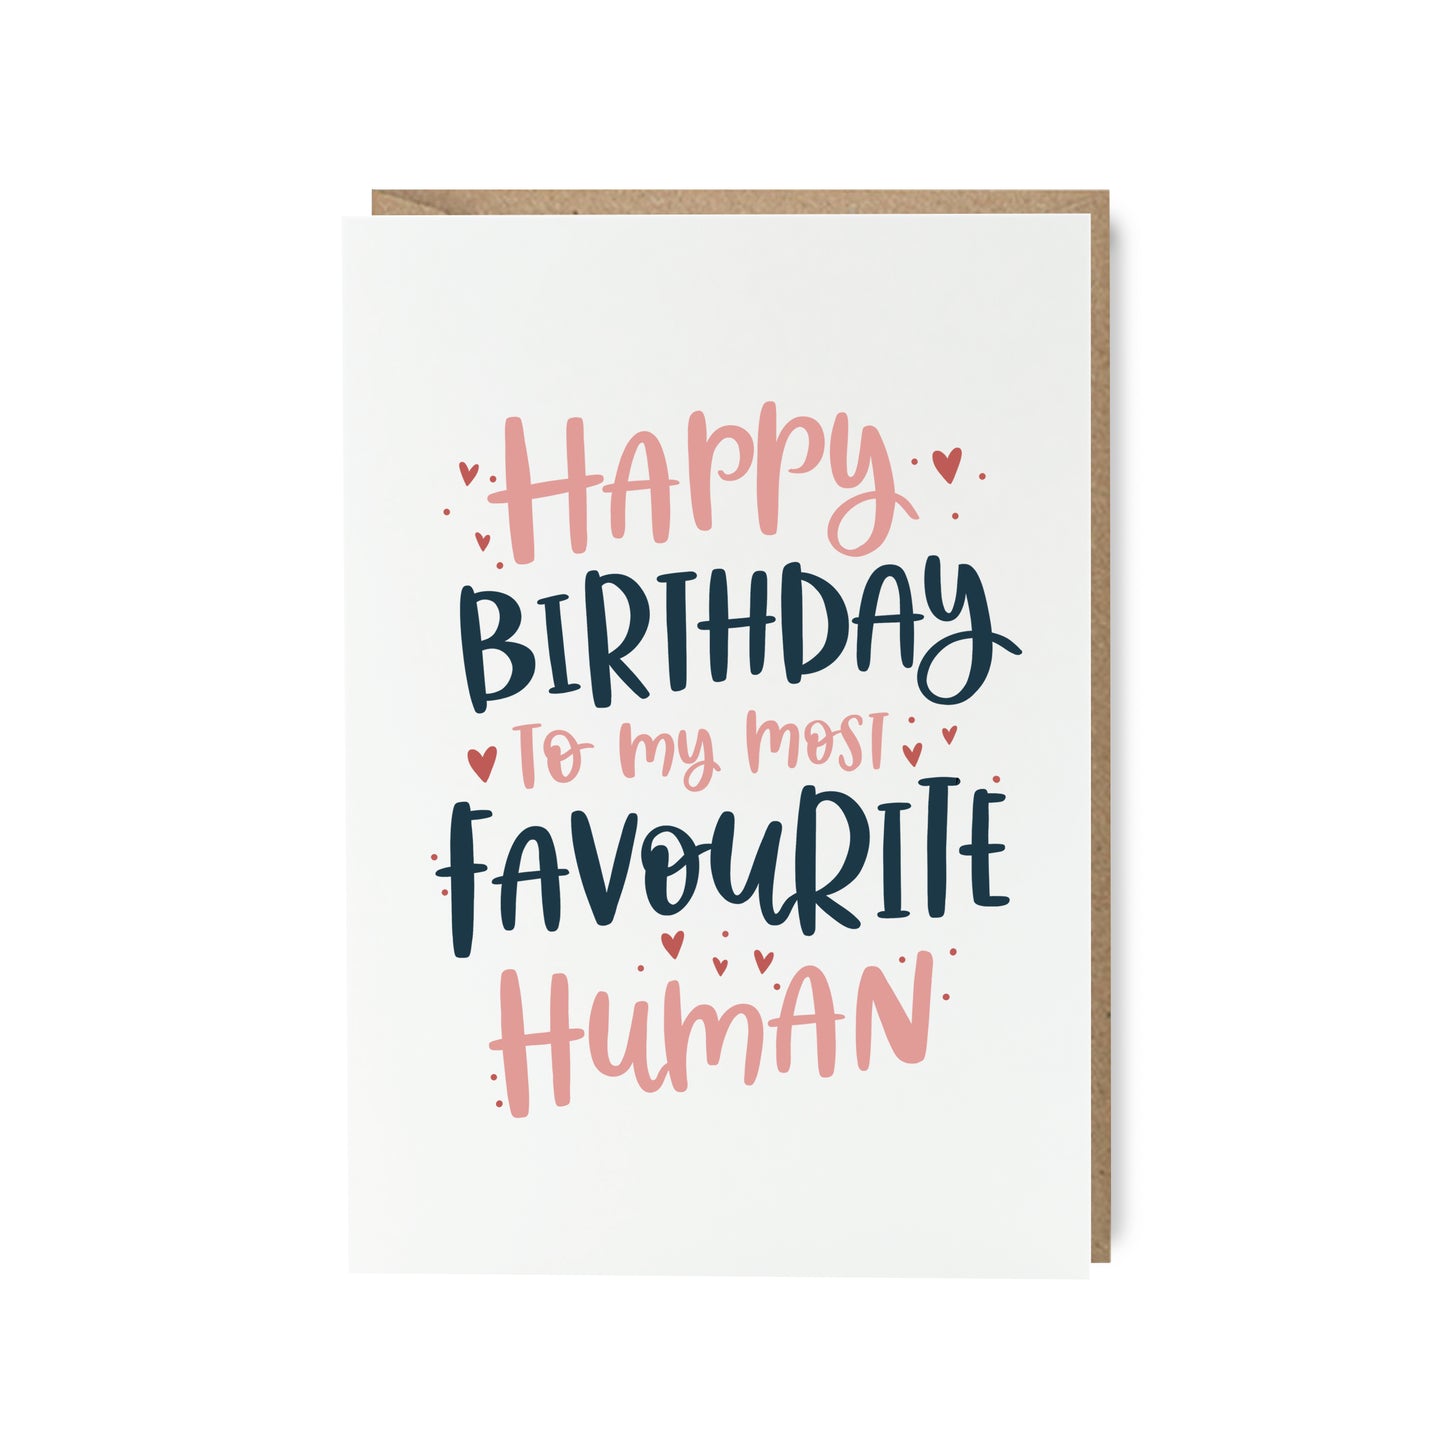 Favourite human birthday card by abbie imagine